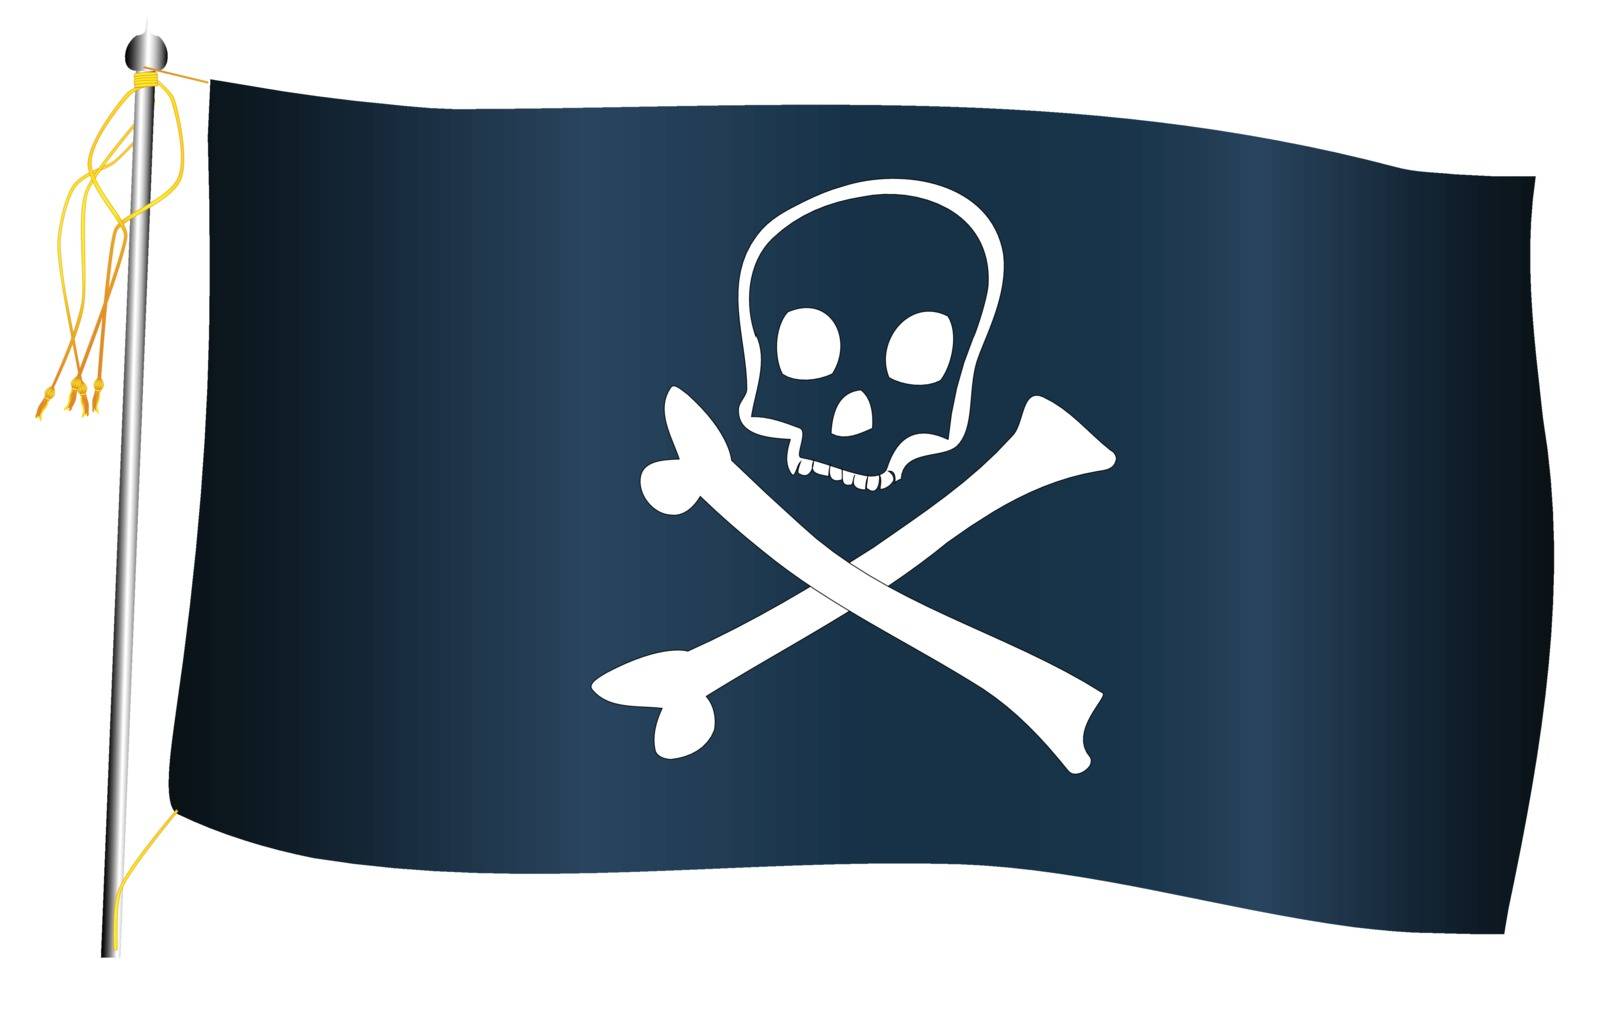 Skull and Crossbones pirate flag flag set against against a white background.